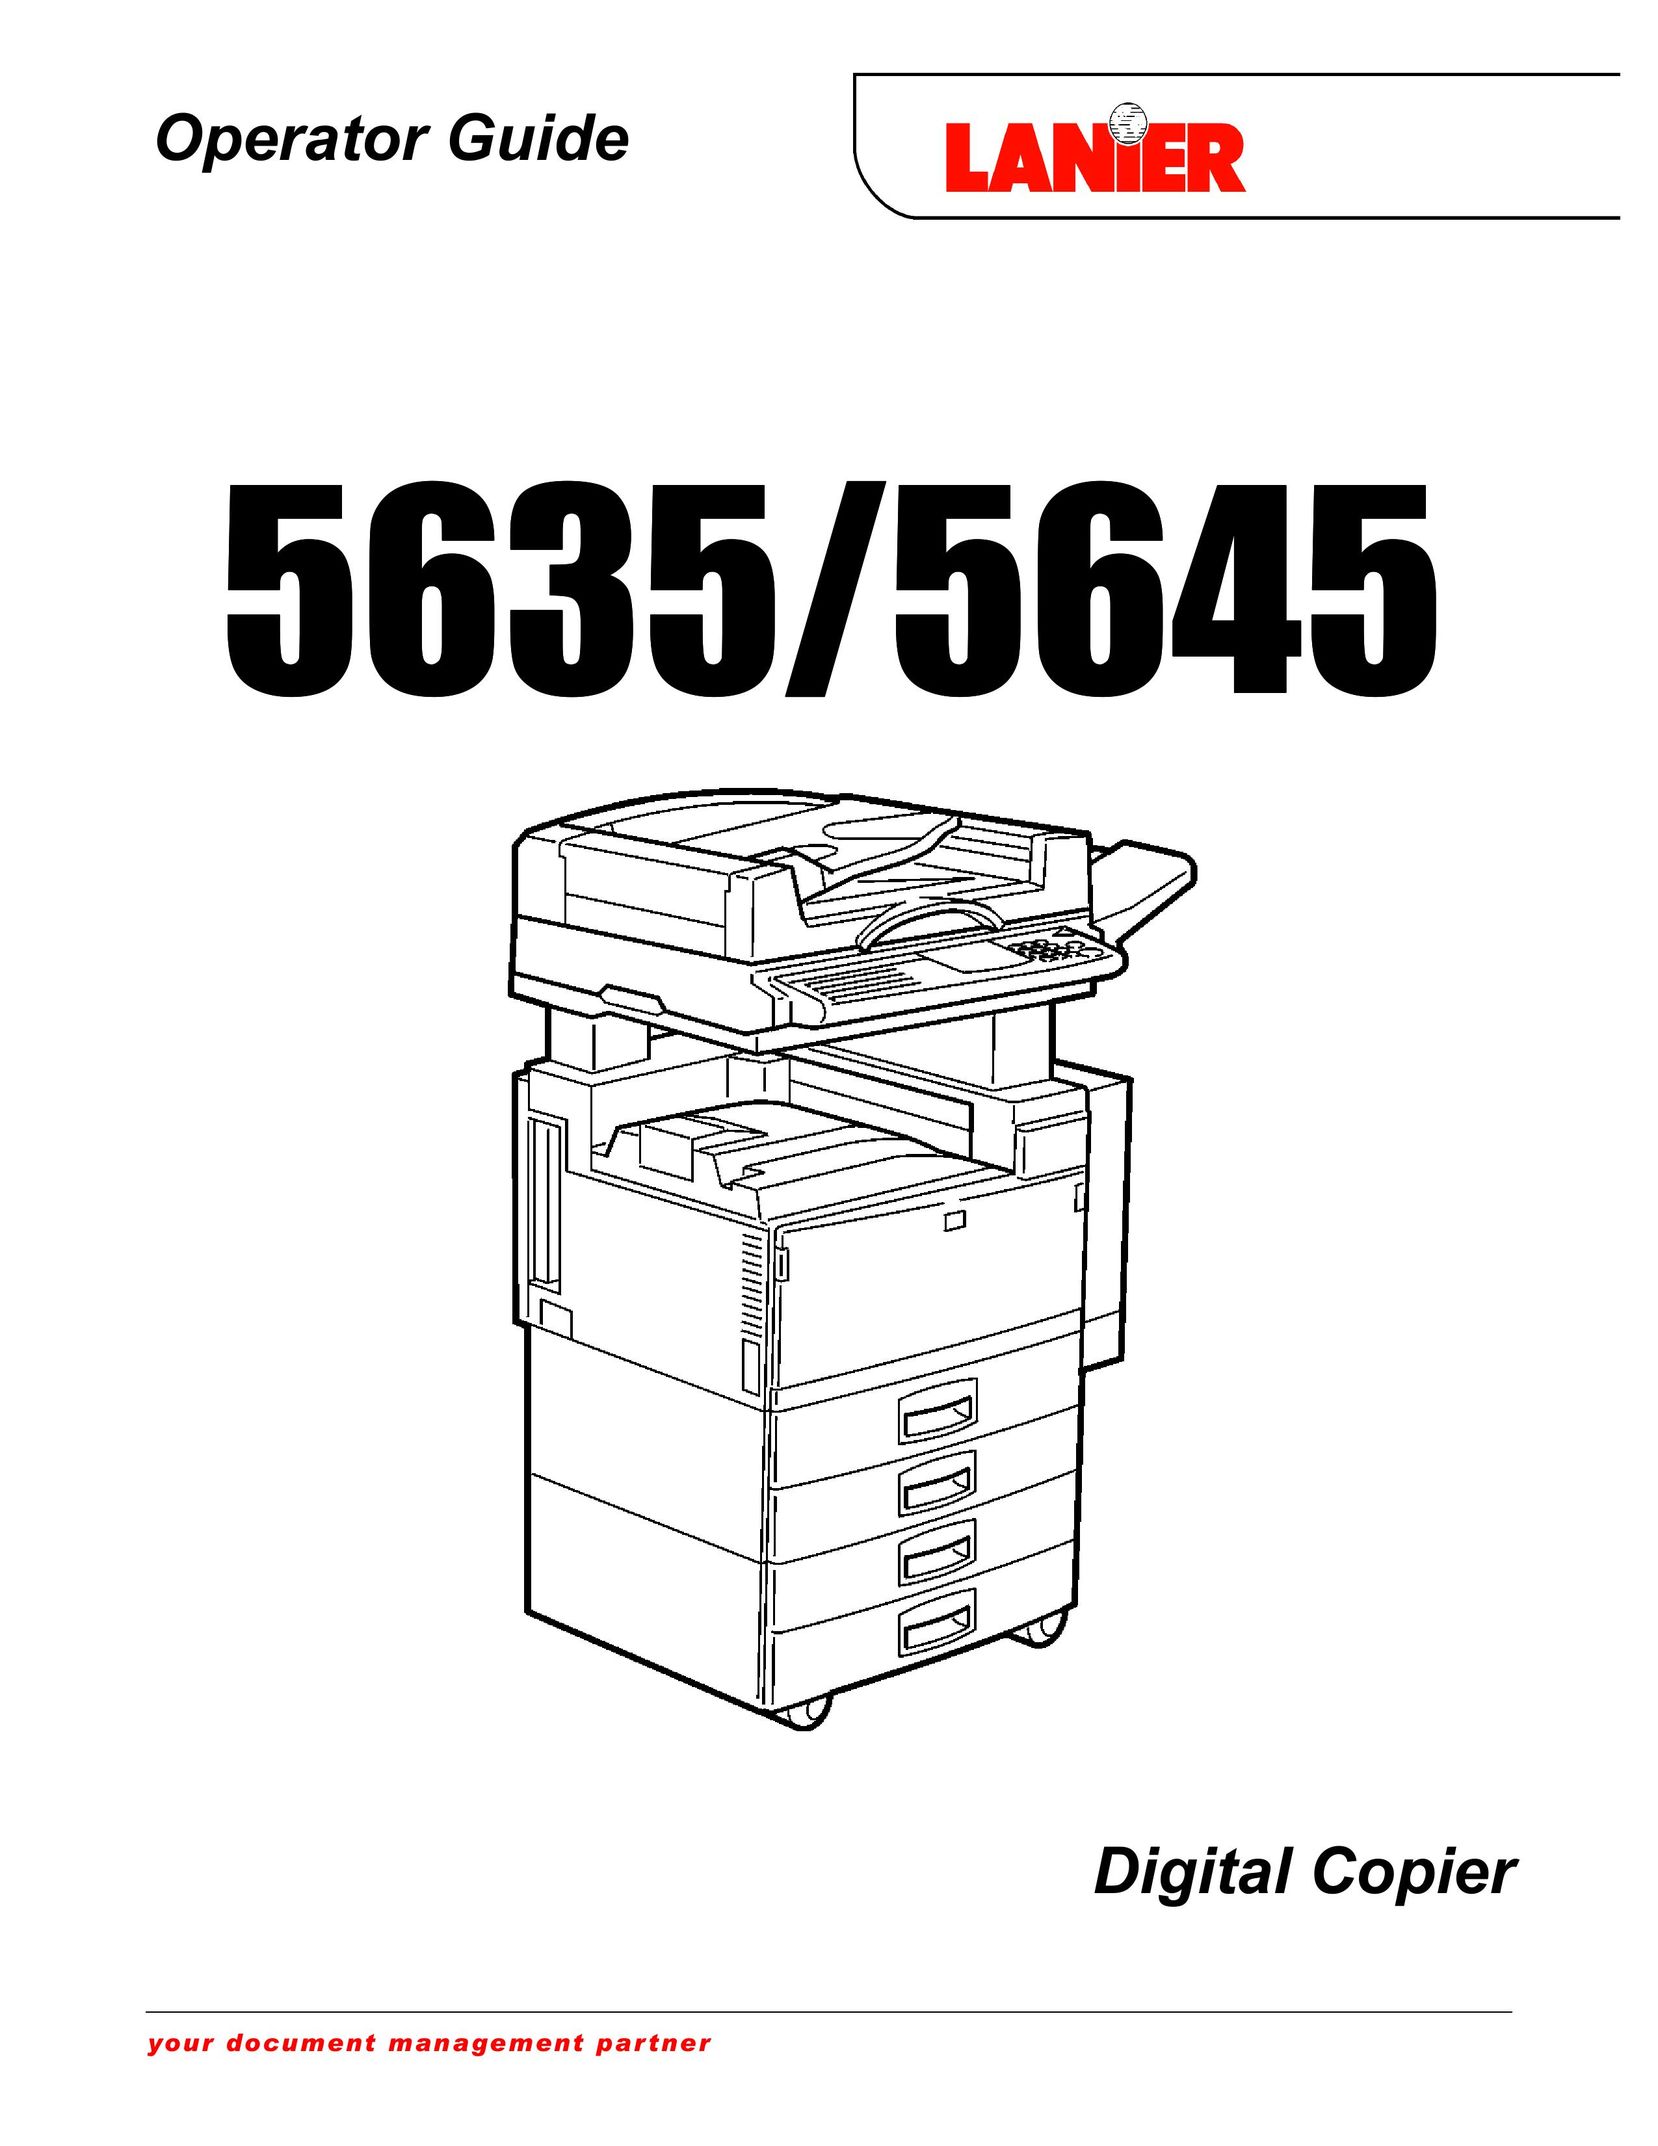 Lanier 5635 All in One Printer User Manual